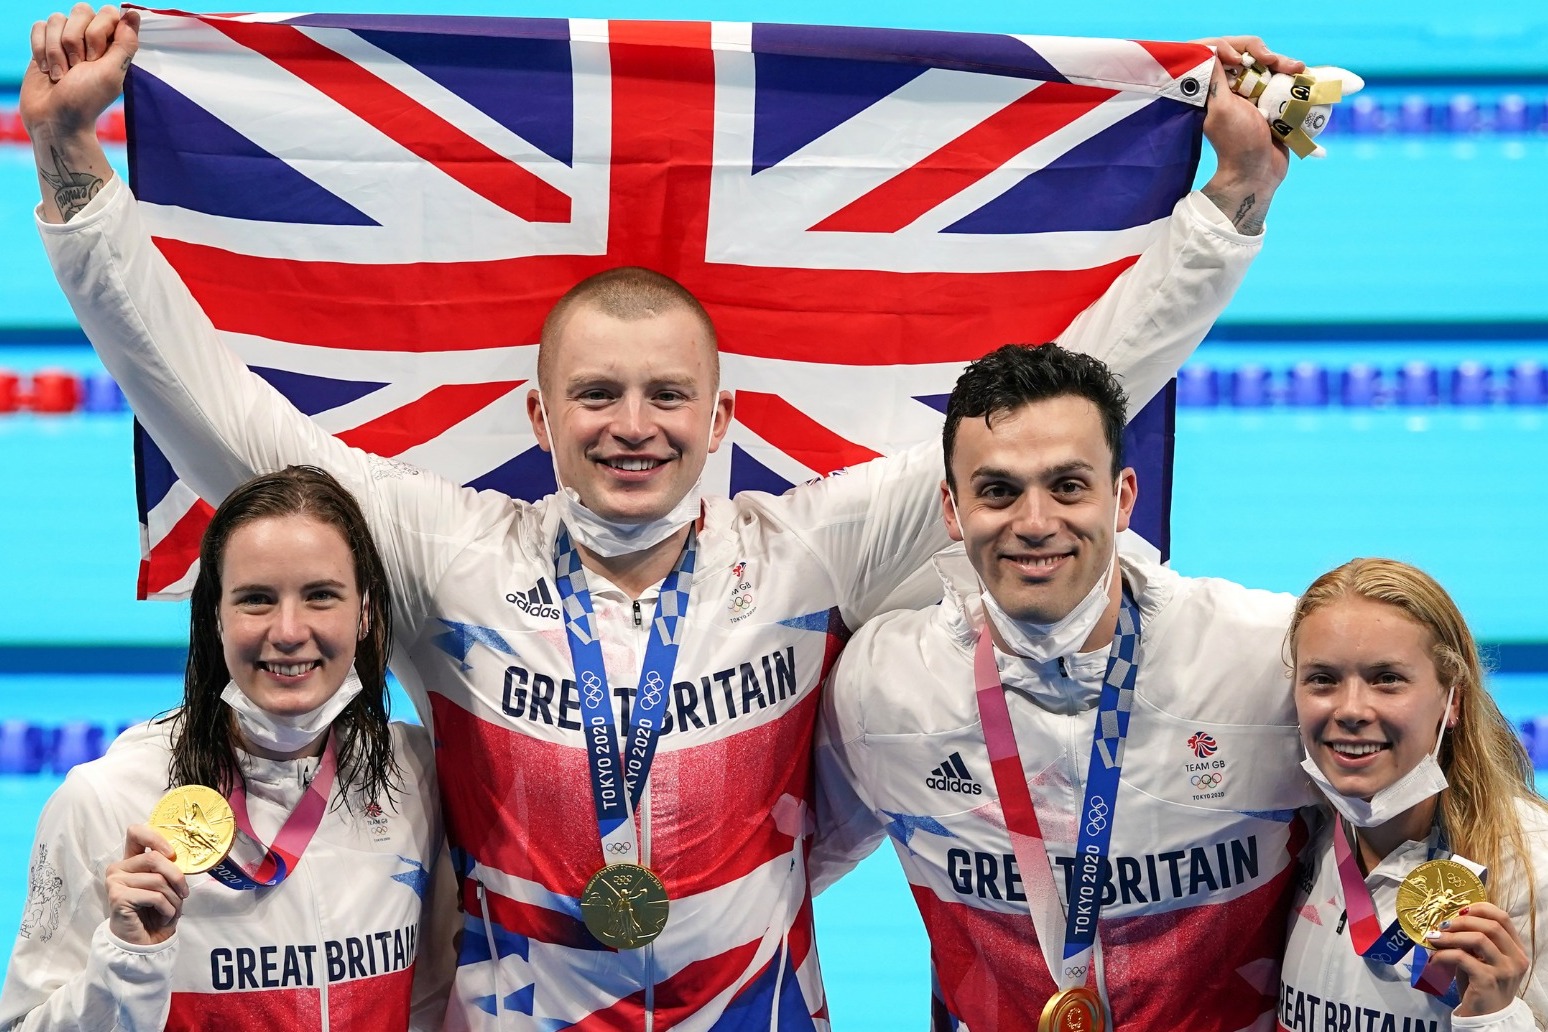 Team effort as GB quartets grab golds in swimming and triathlon relays 